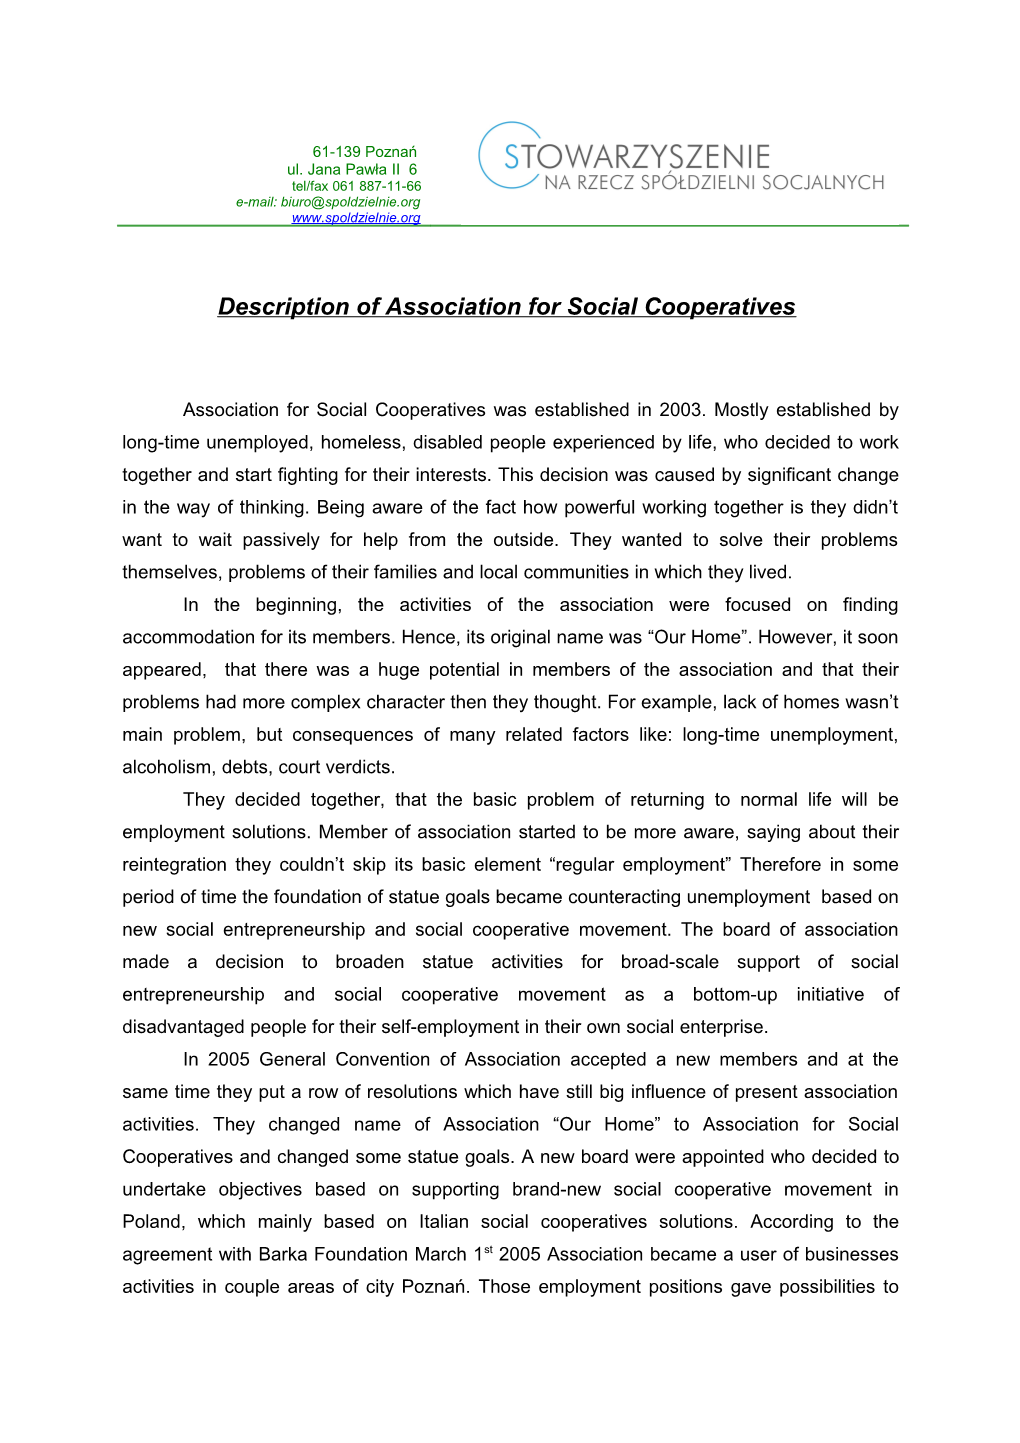 Description of Association for Social Cooperatives